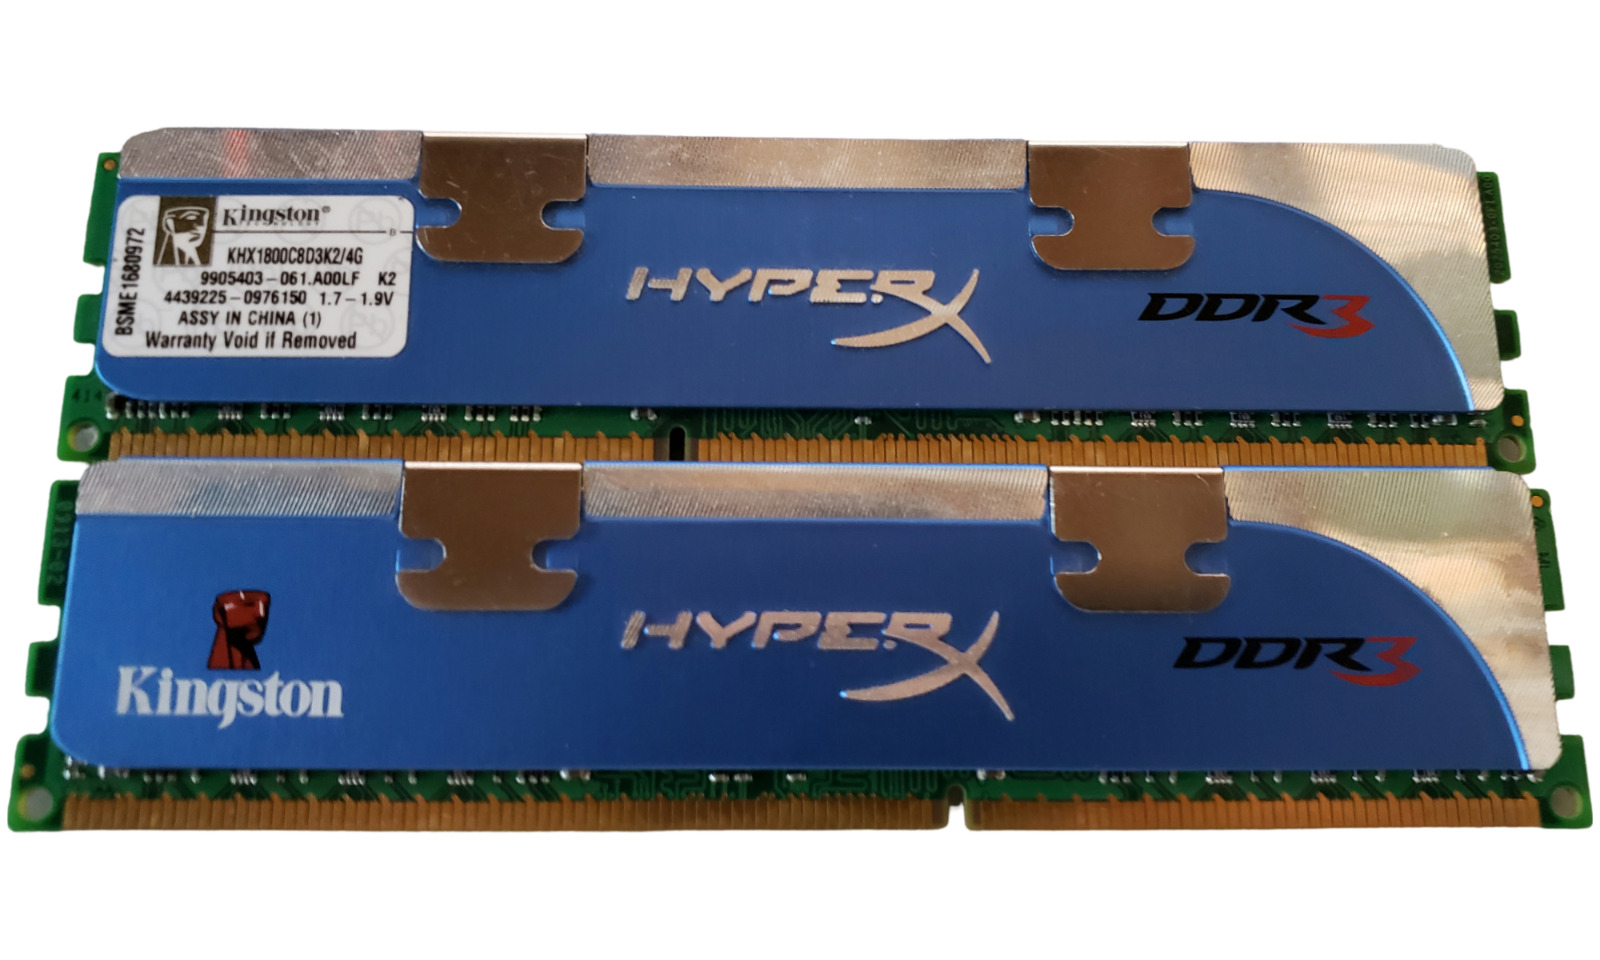 (2 Piece) Kingston HyperX KHX1800C8D3K2/4G DDR3-1800 4GB (2x2GB) Memory